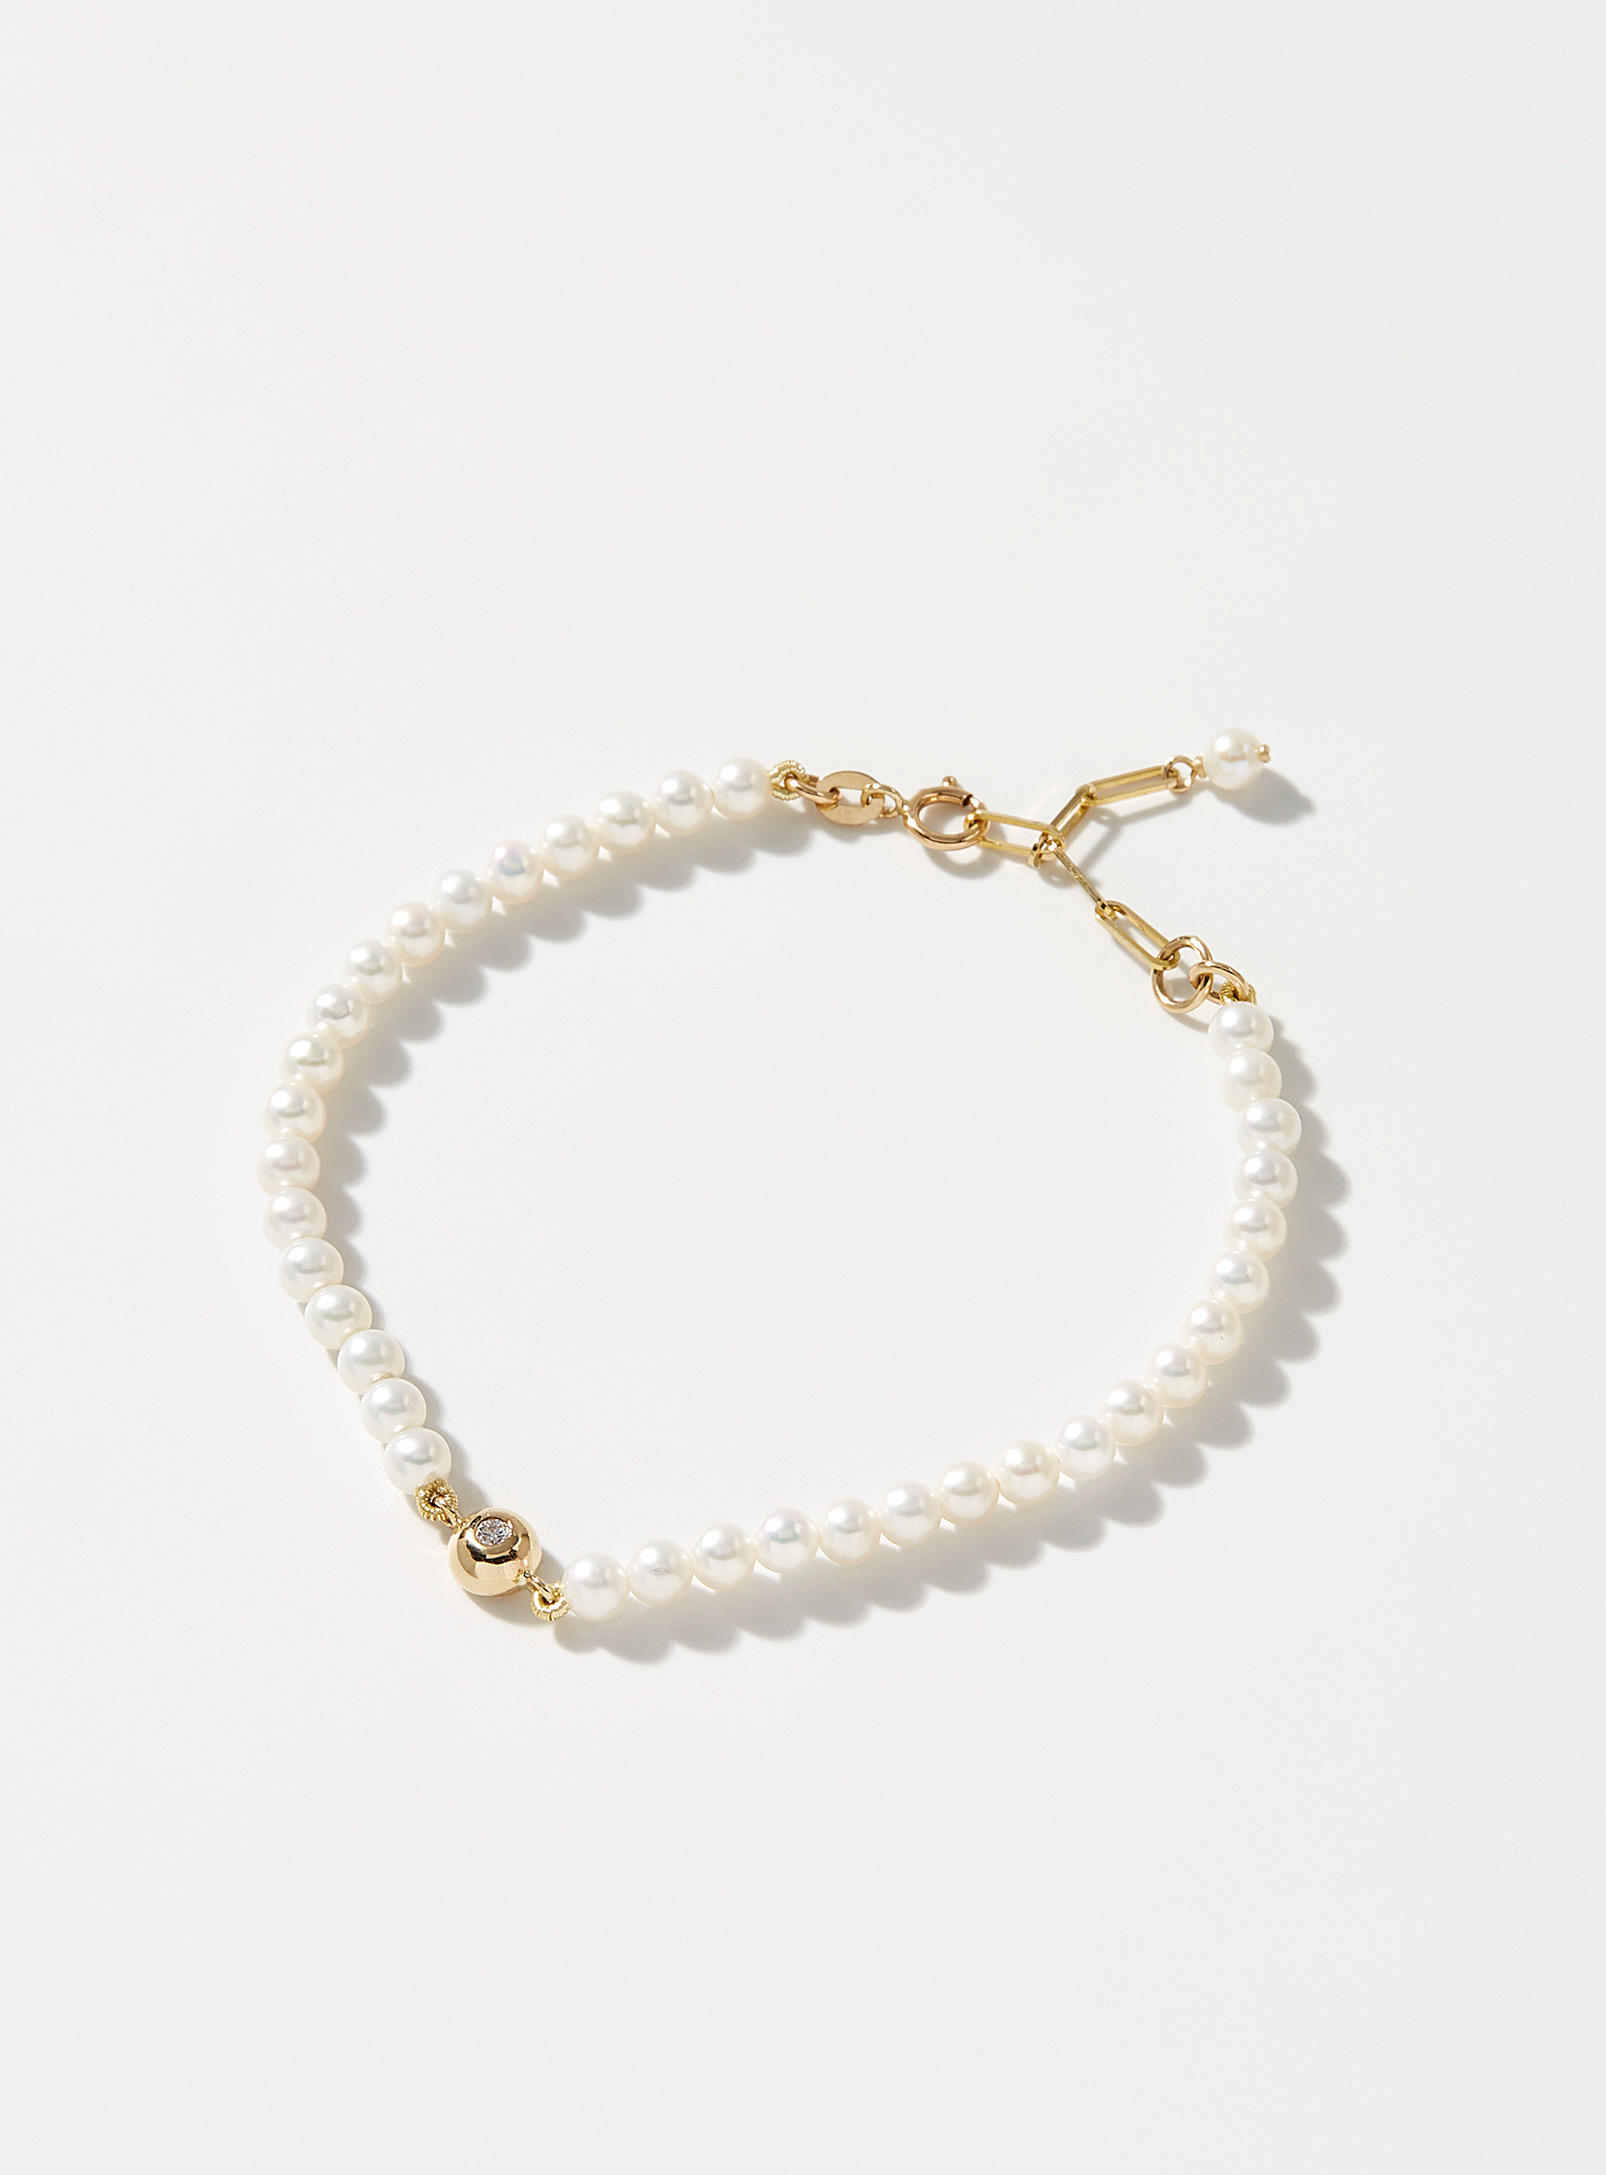 Poppy Finch - Women's Mini-diamond and pearls bracelet